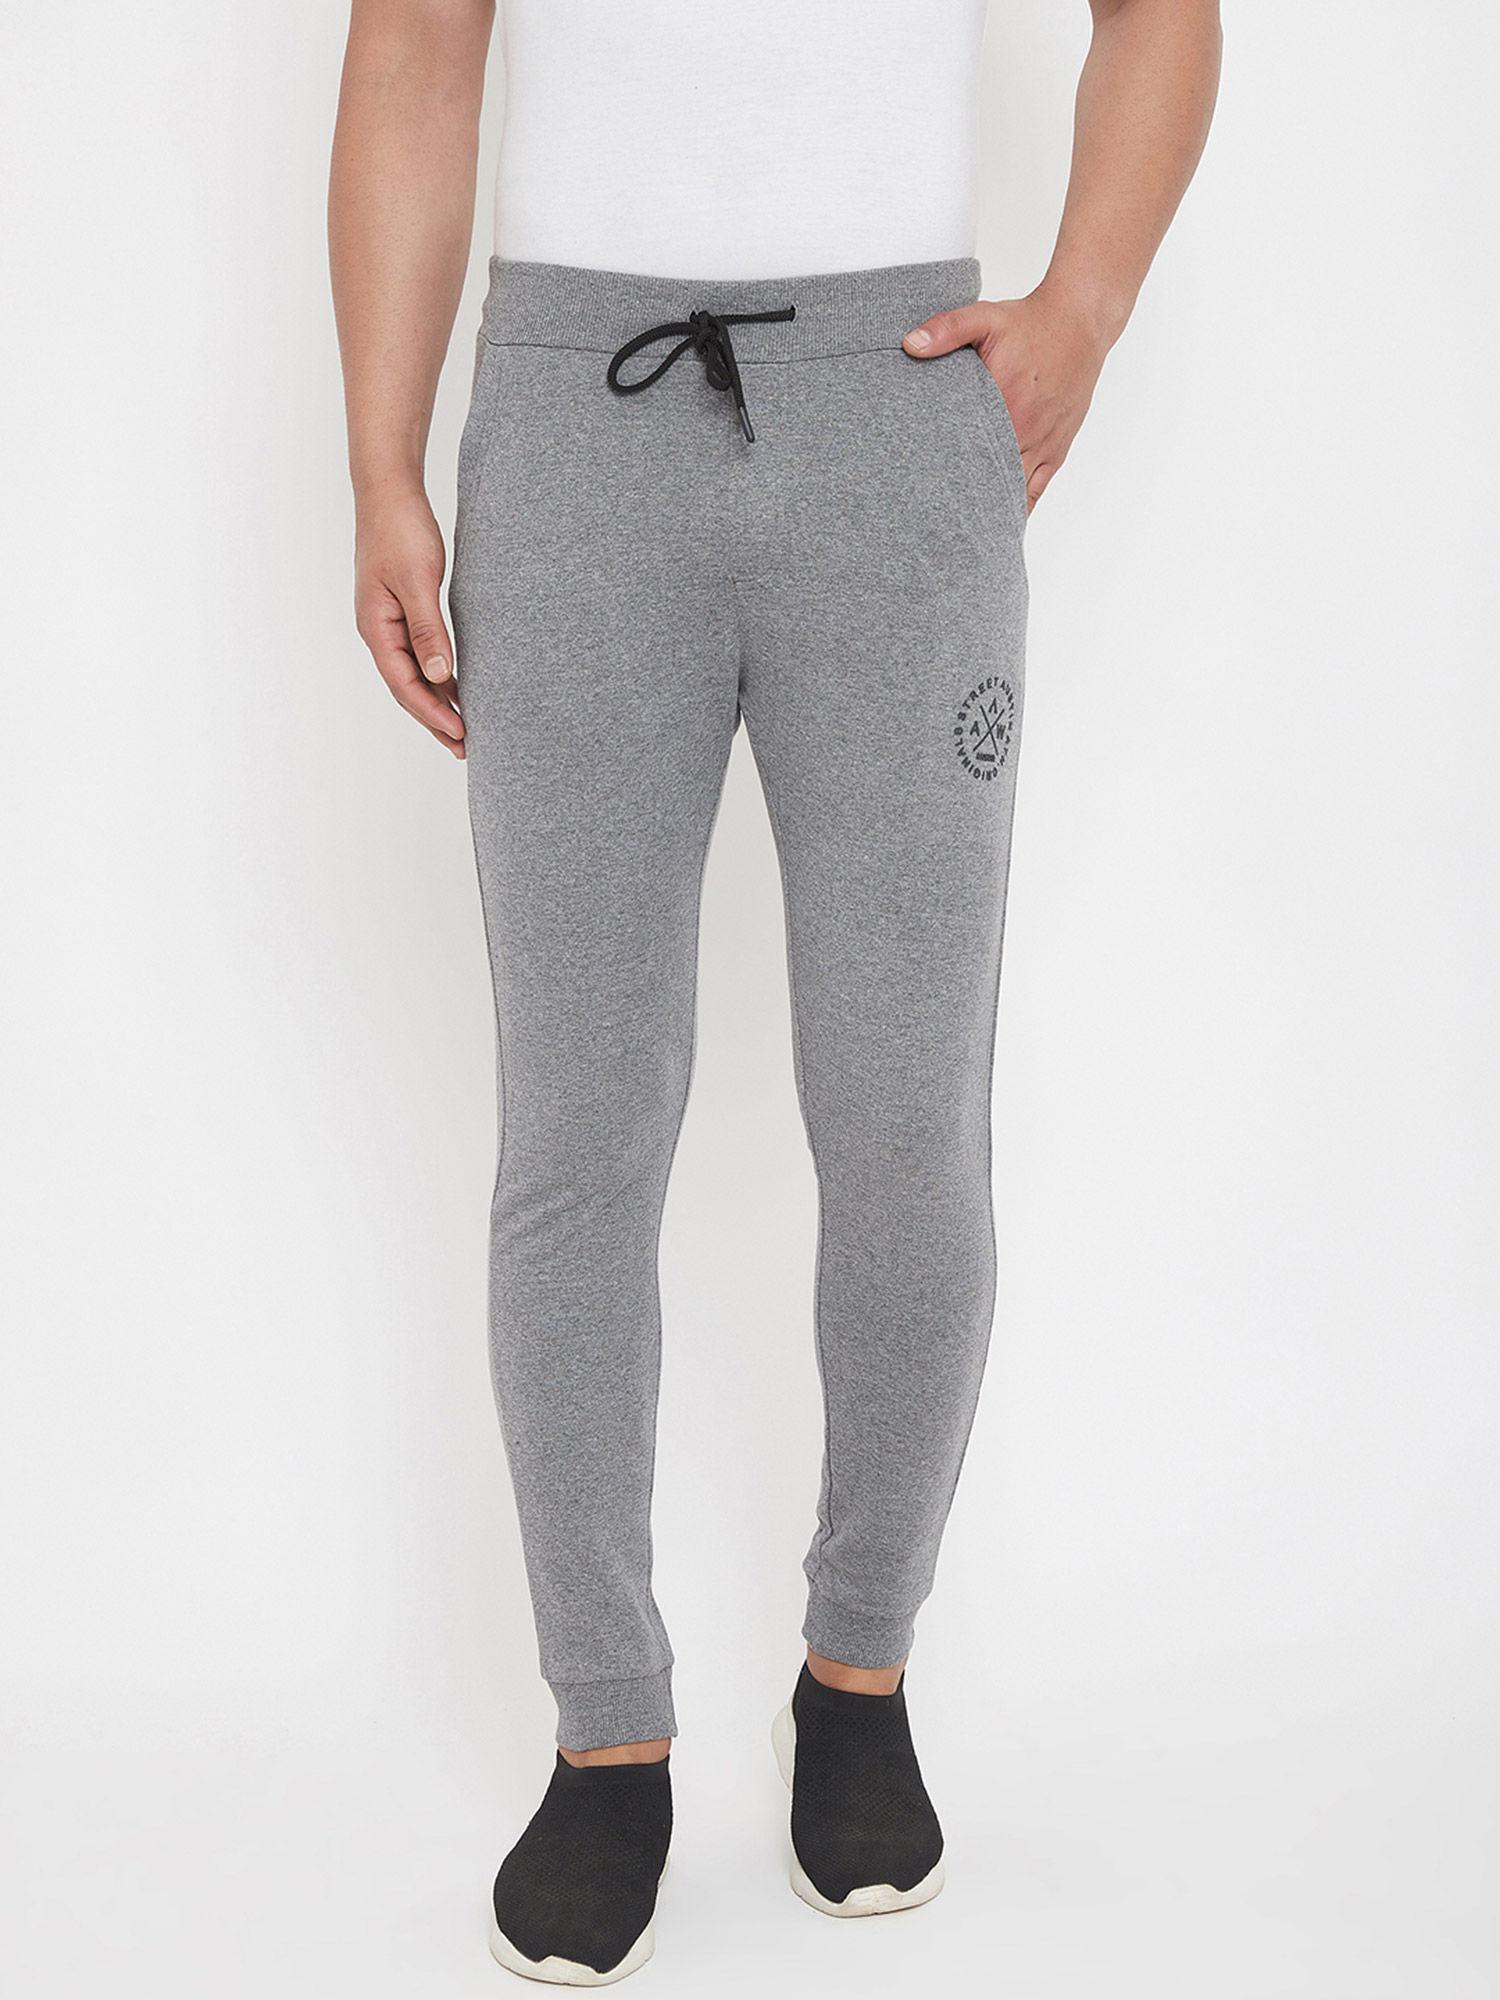 men grey printed track pant has two pockets